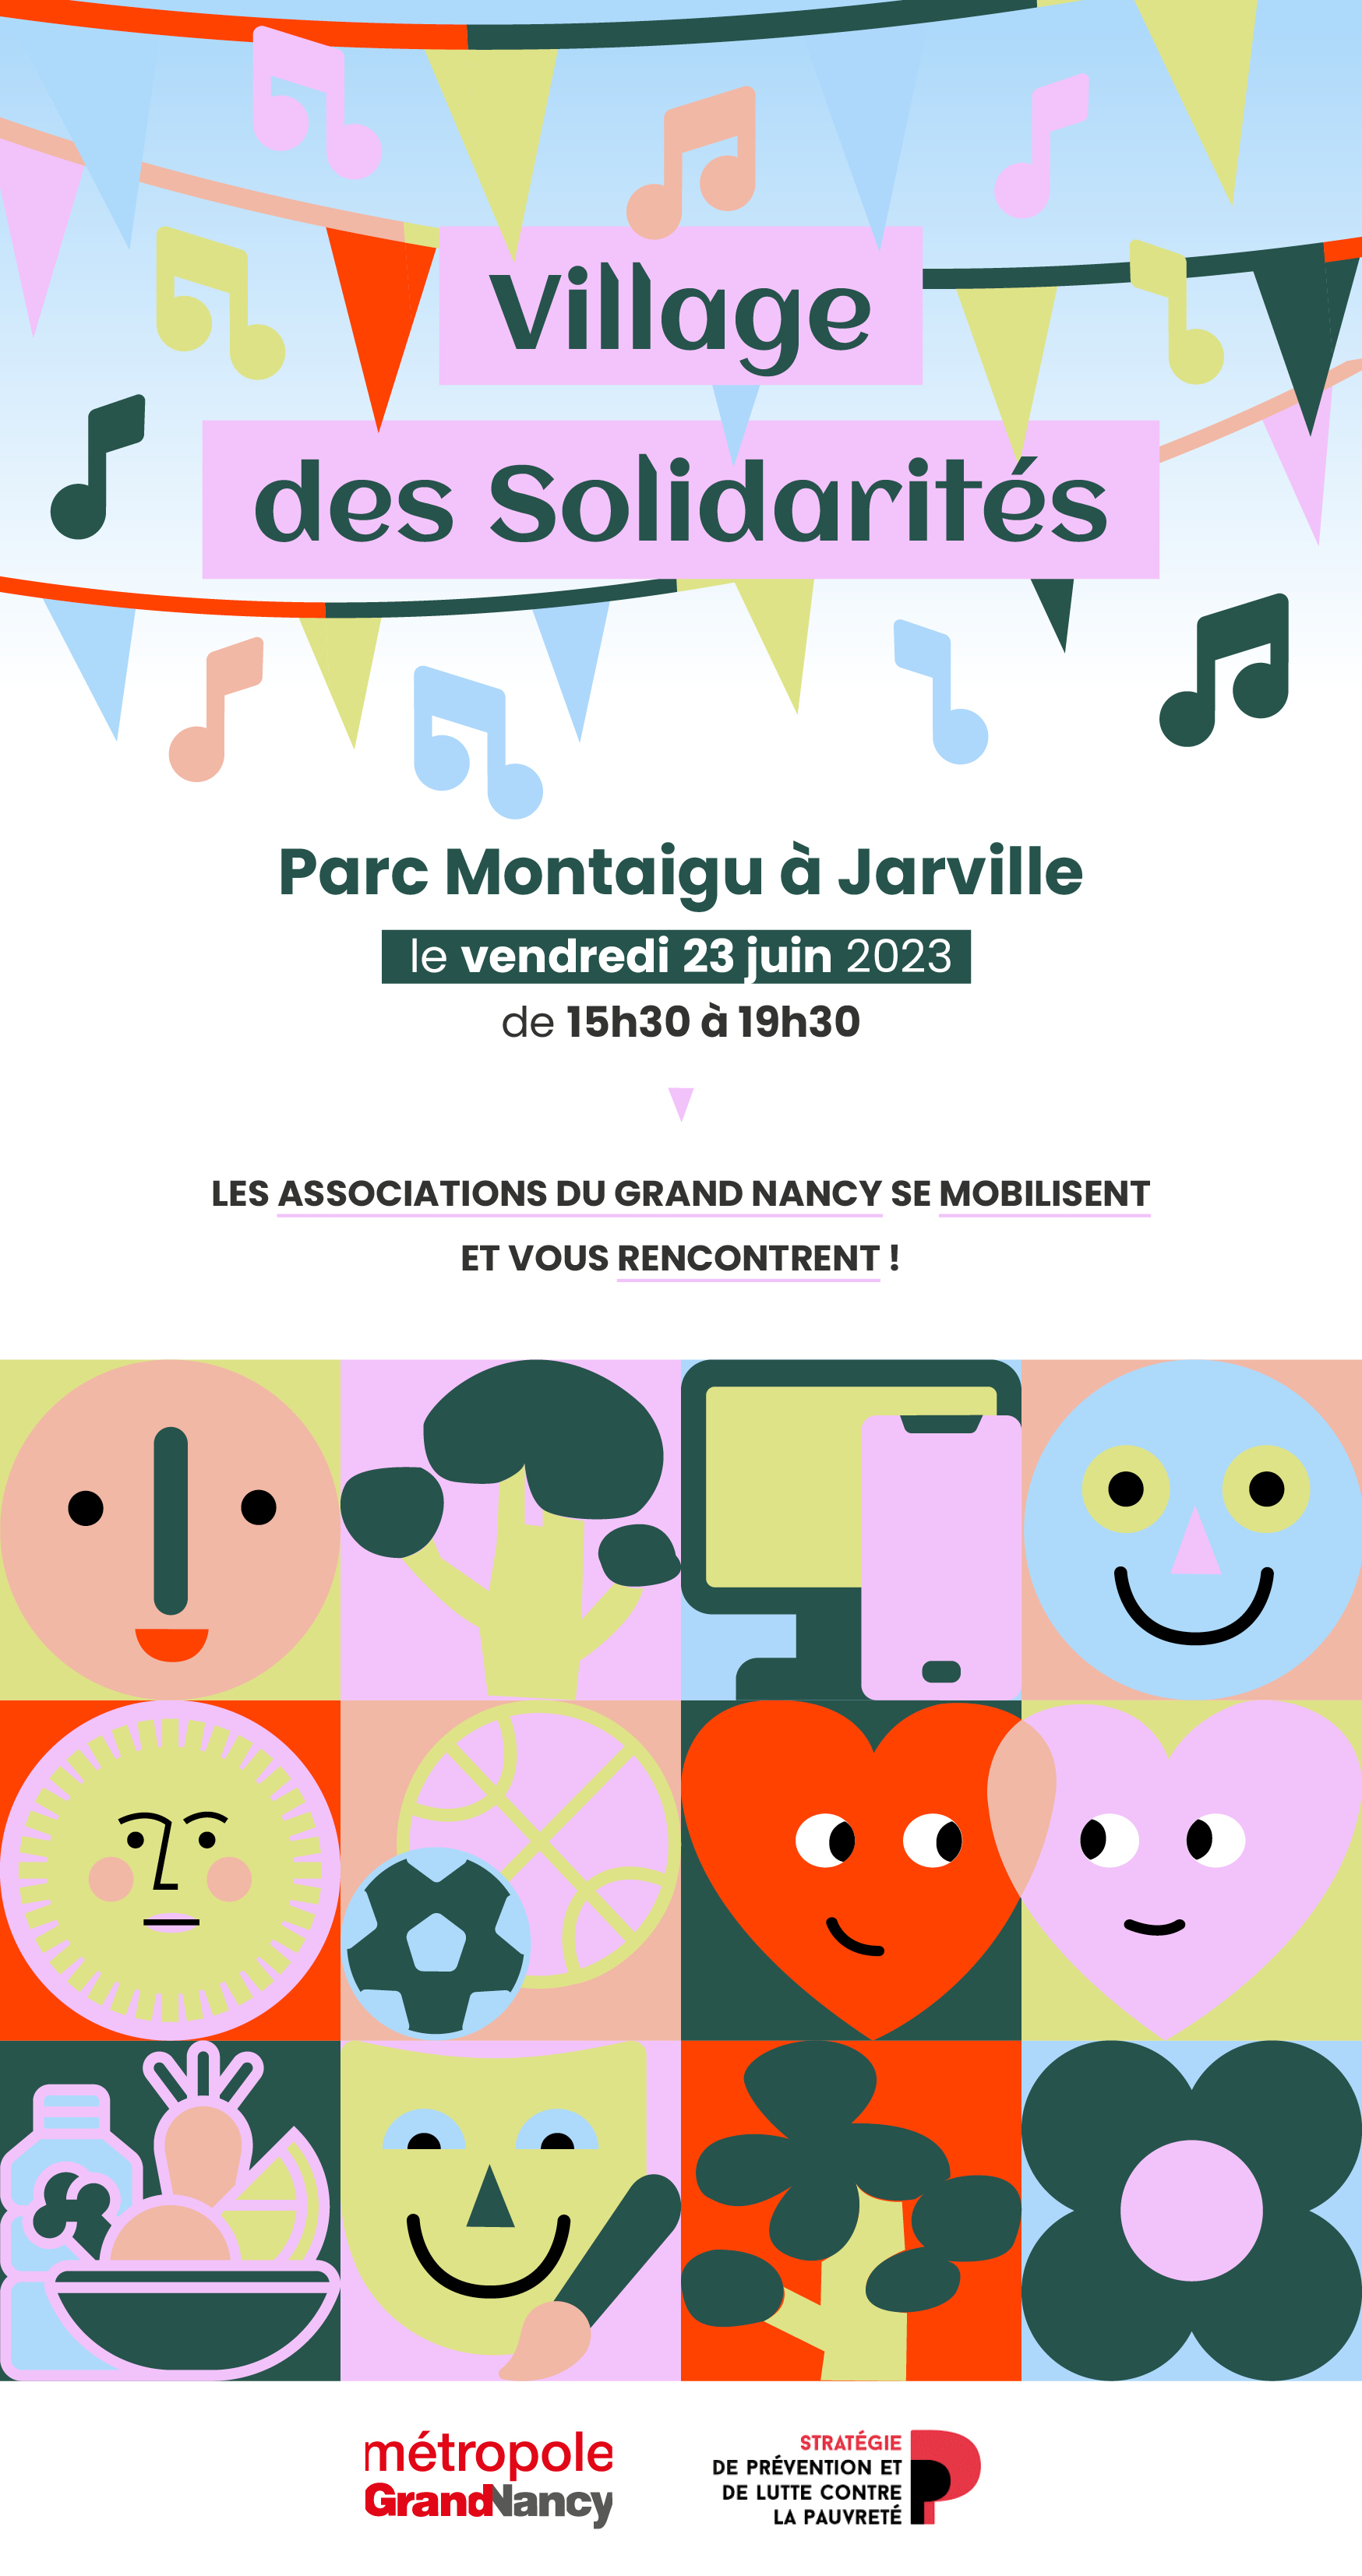 Village solidarites 23 juin 2023 Parc Montaigu Jarville